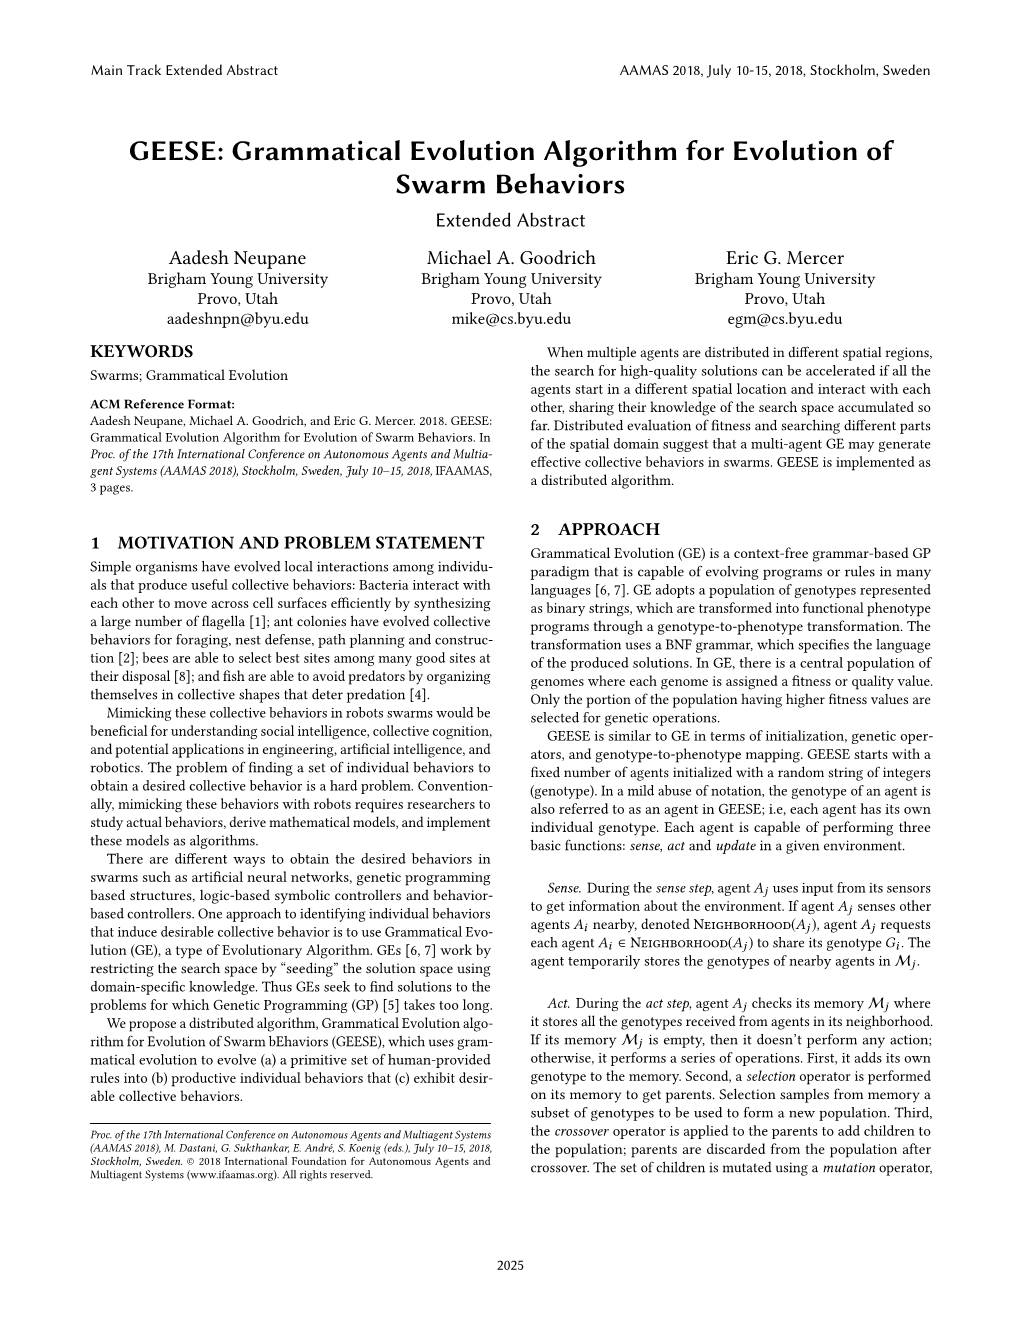 Grammatical Evolution Algorithm for Evolution of Swarm Behaviors Extended Abstract Aadesh Neupane Michael A